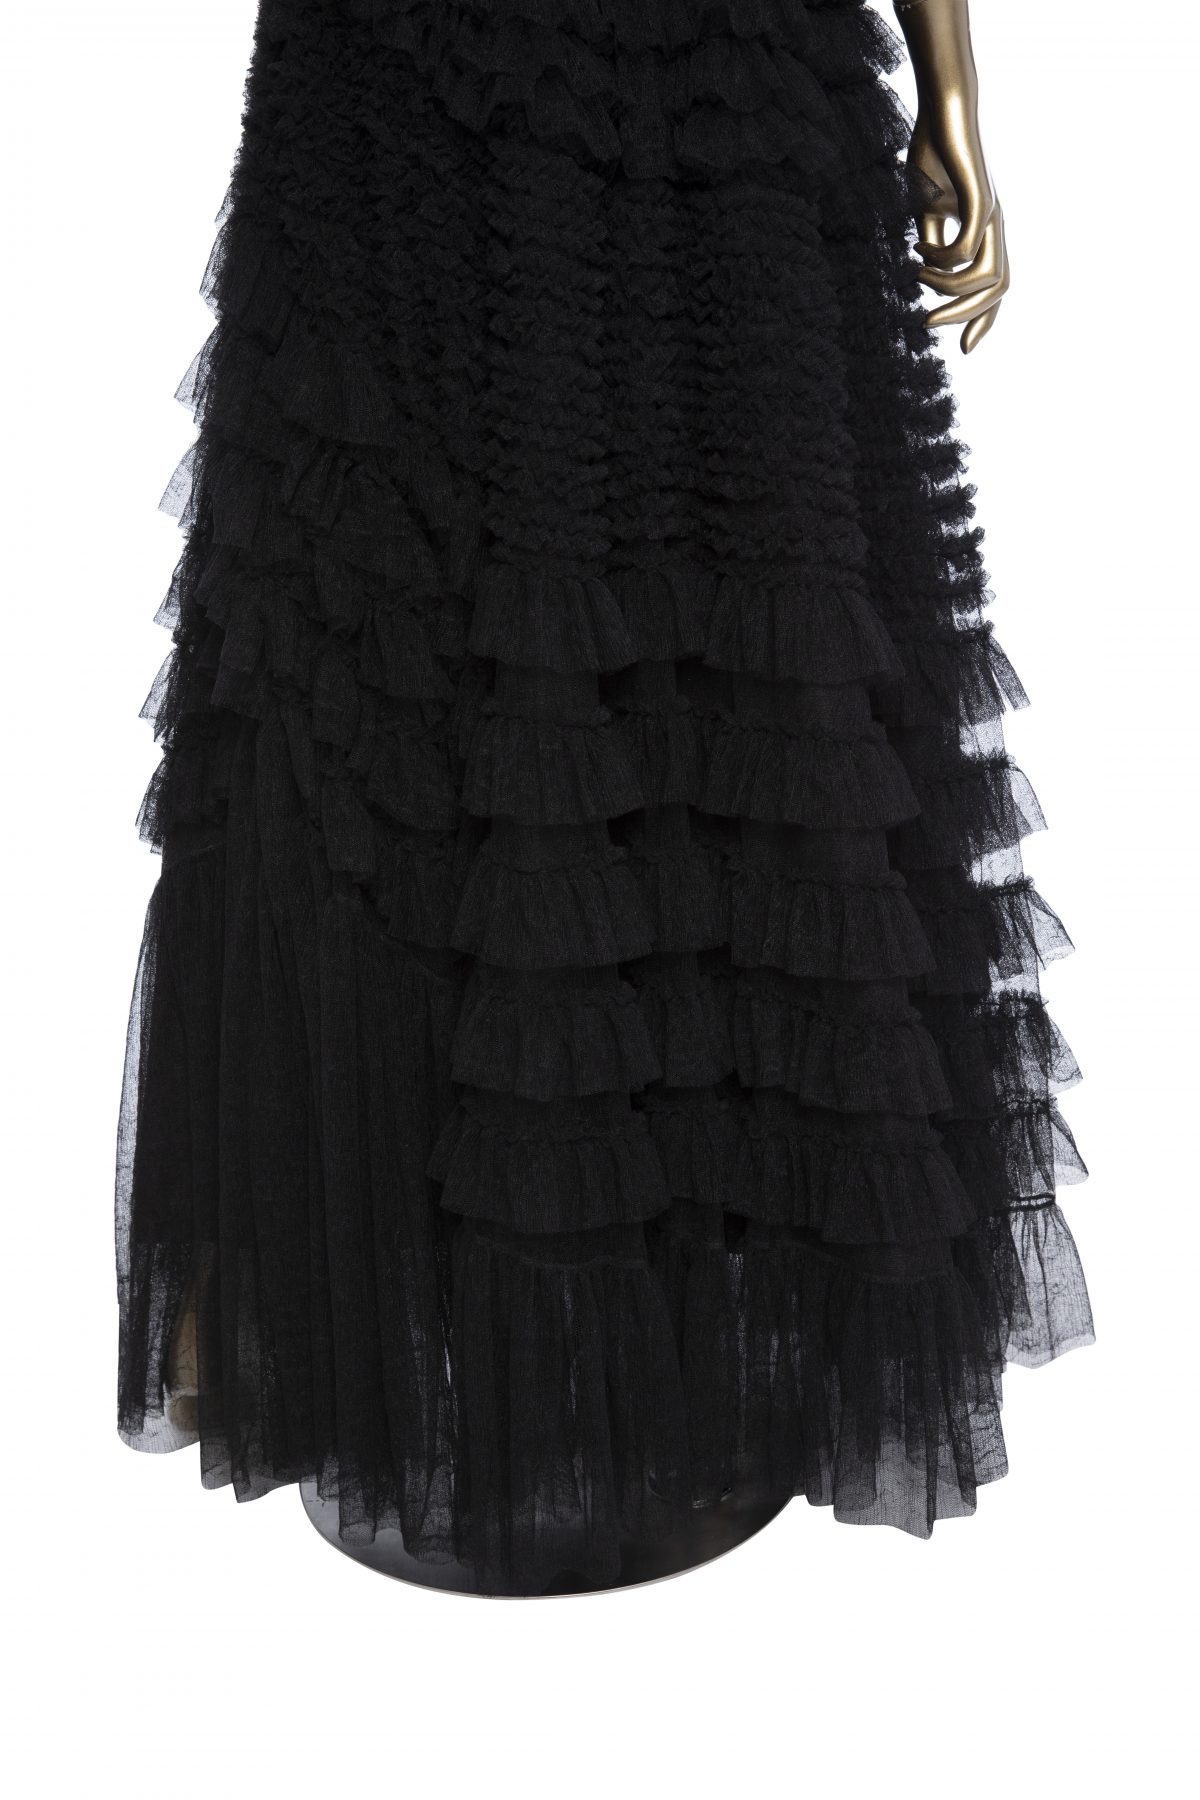 Christian Dior Ruffled Tulle Dress - Janet Mandell